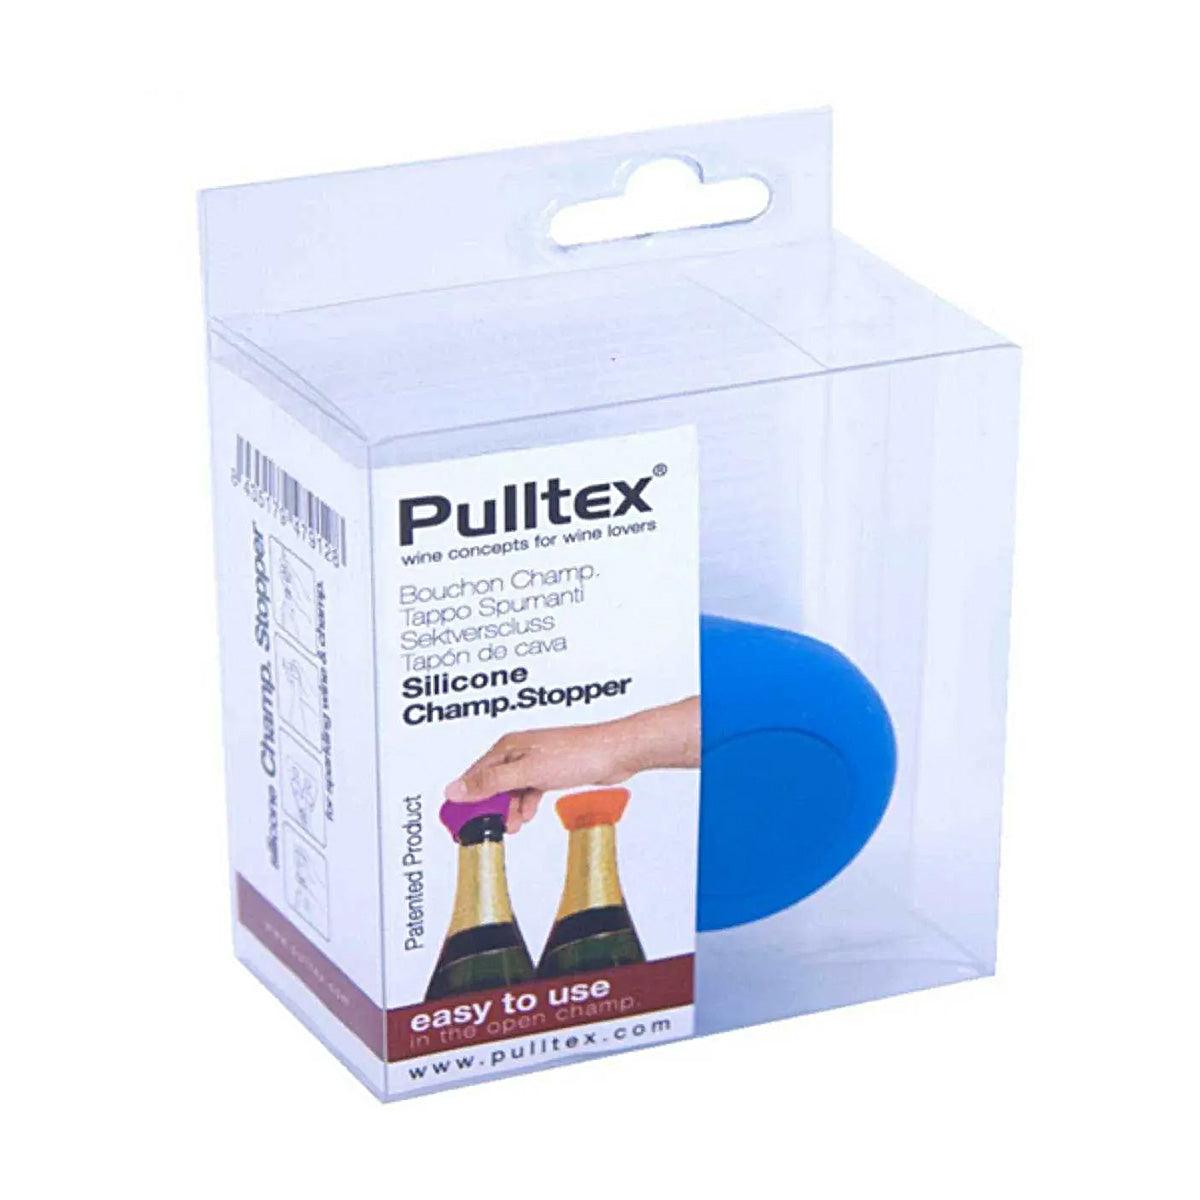 Pulltex "Basics" Silicone Champagne Stopper (10792710) - Stopper - GDV Fine Wines® - Accessories Product, Pulltex, Spain, Stopper